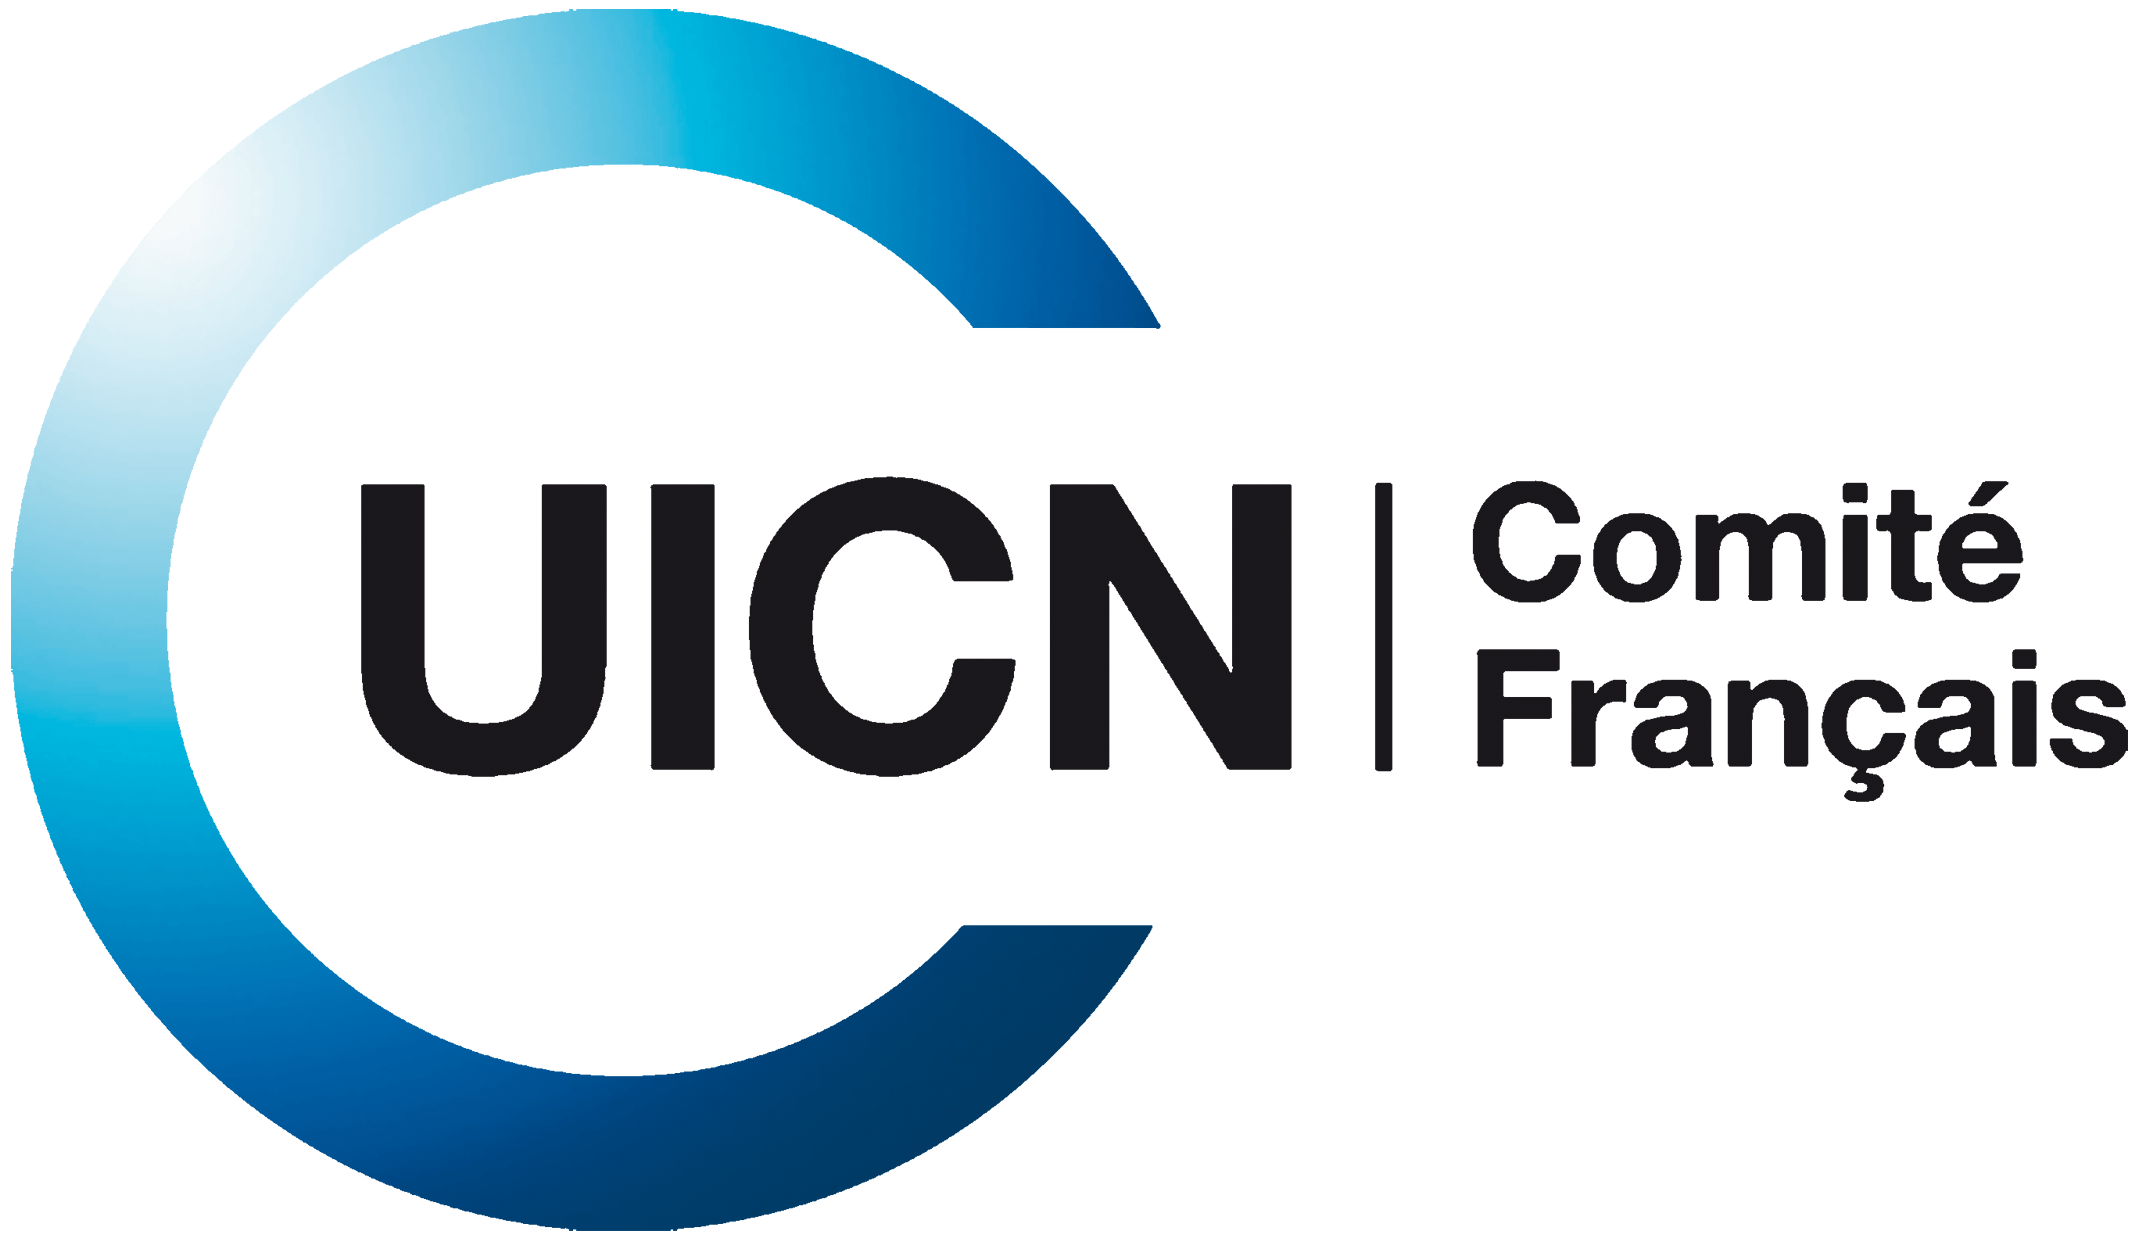 UICN France